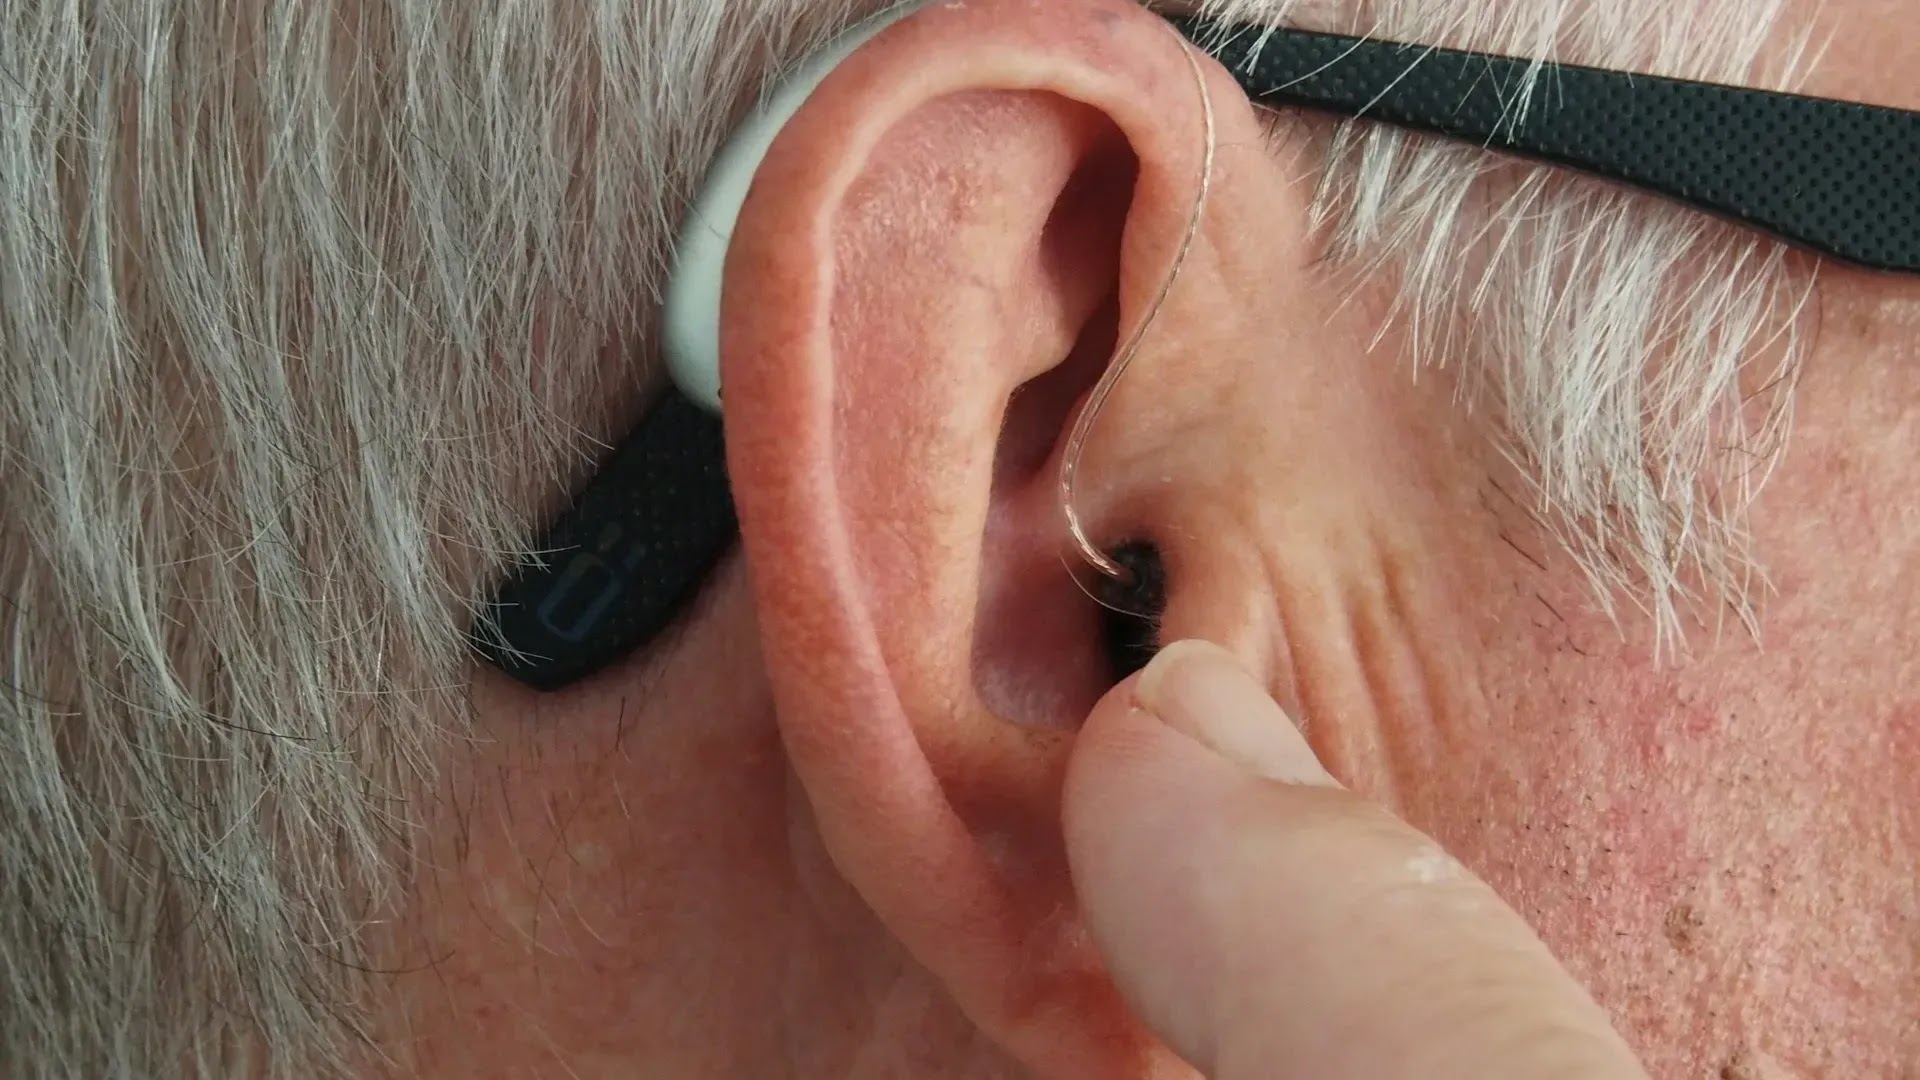 Representational - Old man wearing hearing aid